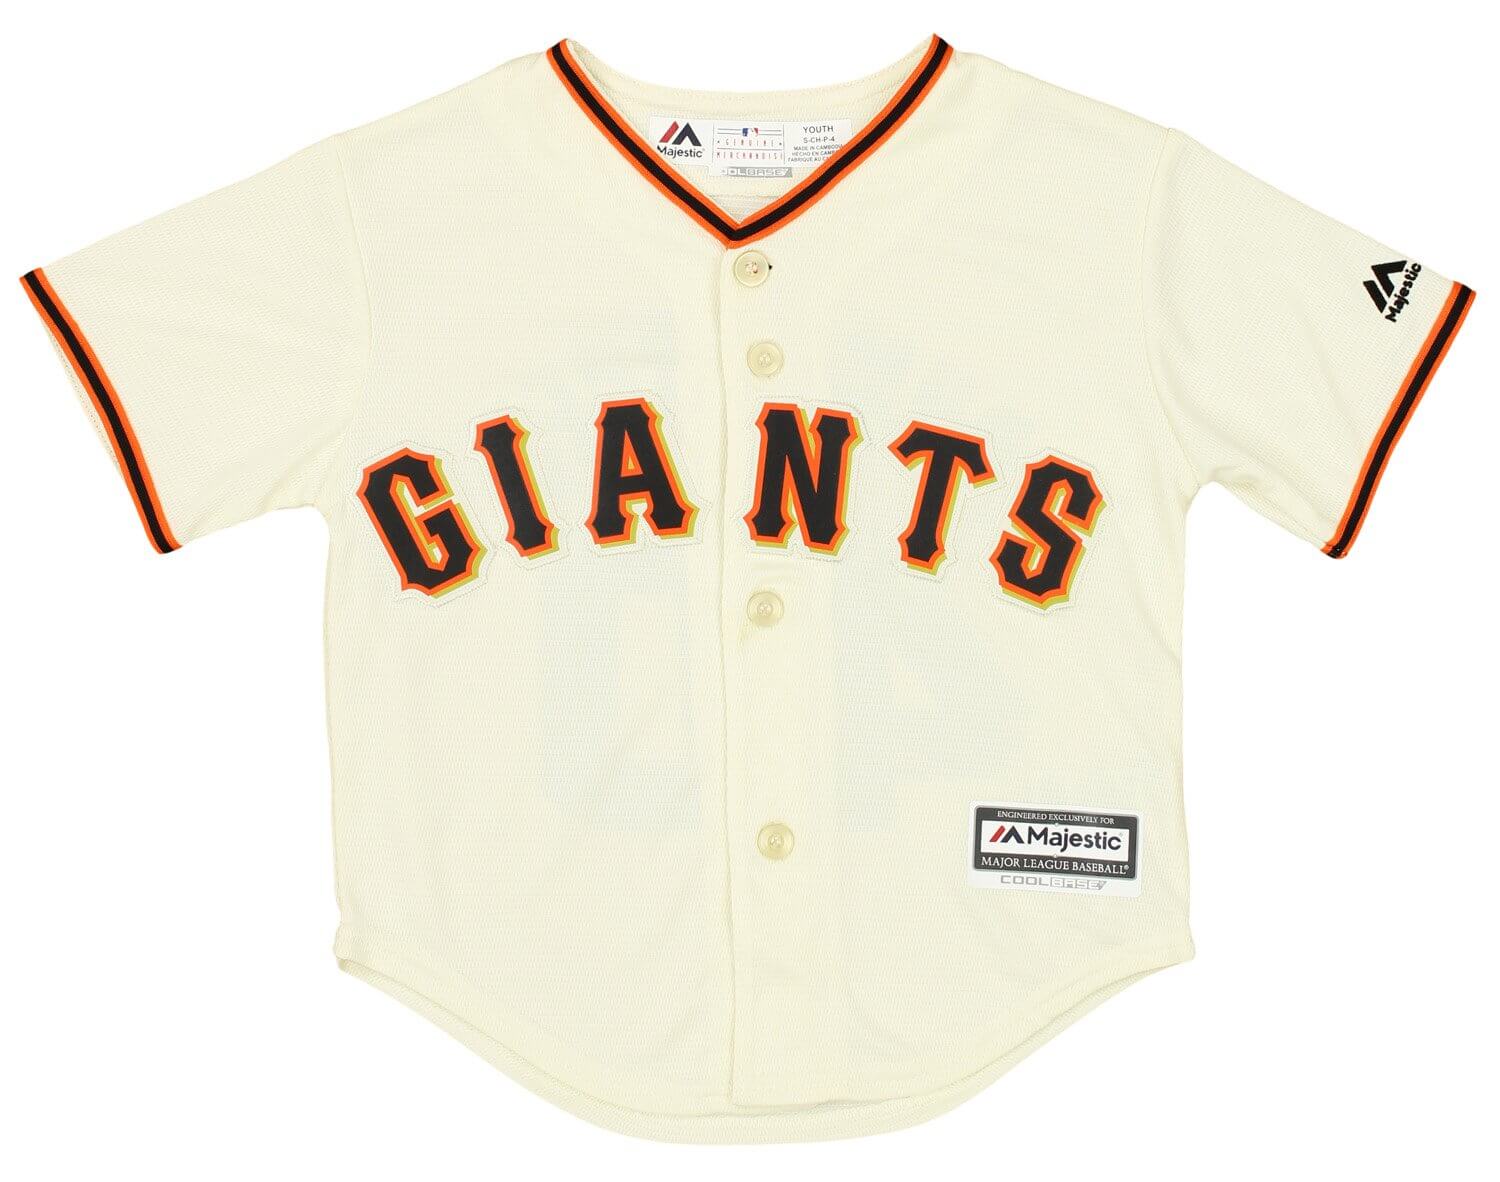 San Francisco Giants - 2018 Game Used Black Home Alternate Jersey - worn by  #40 Madison Bumgarner - size 50